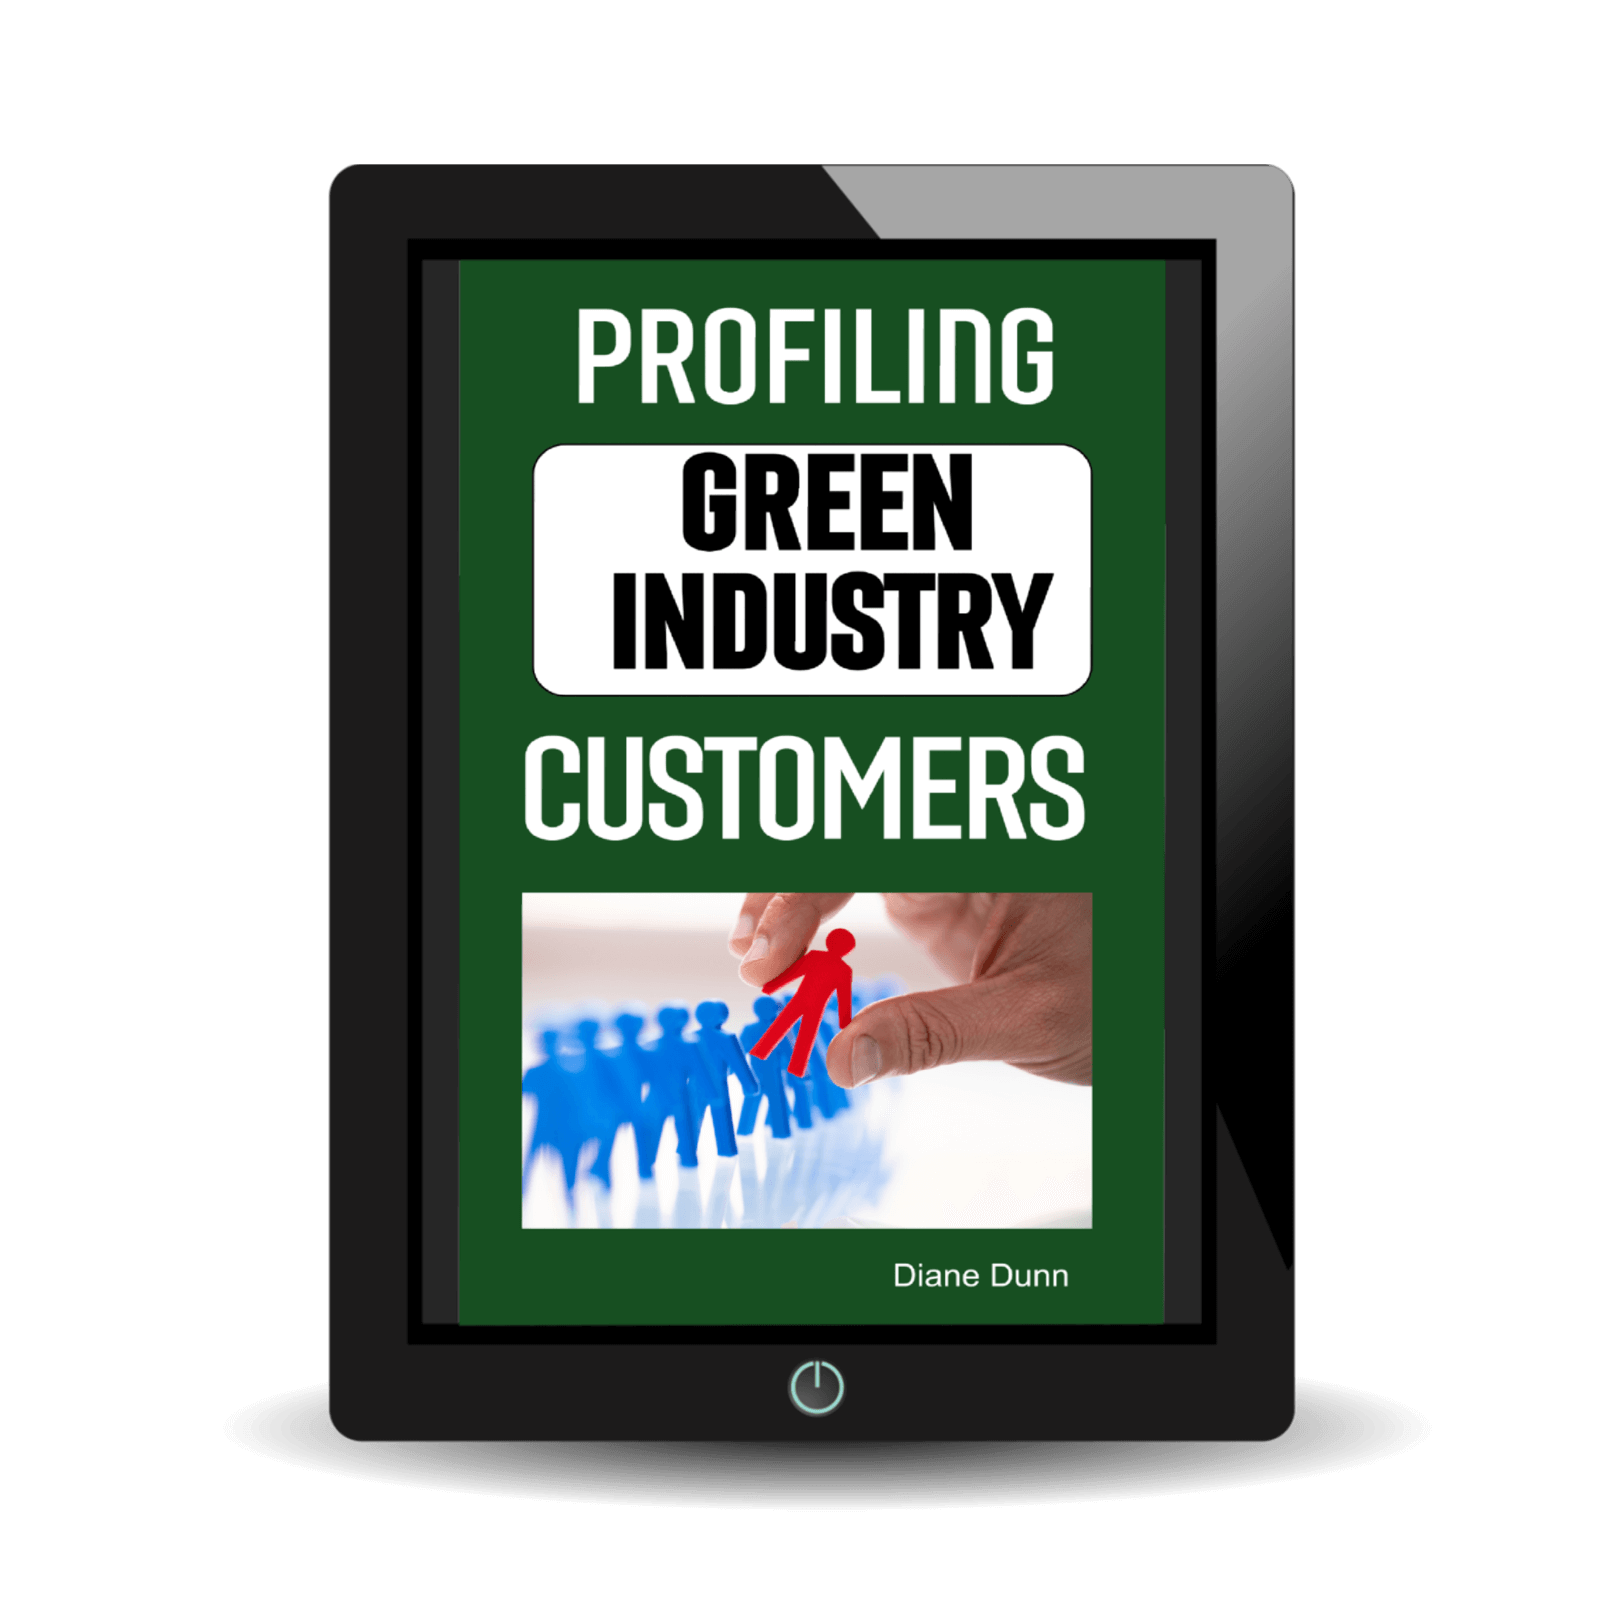 Green industry customer profiling book